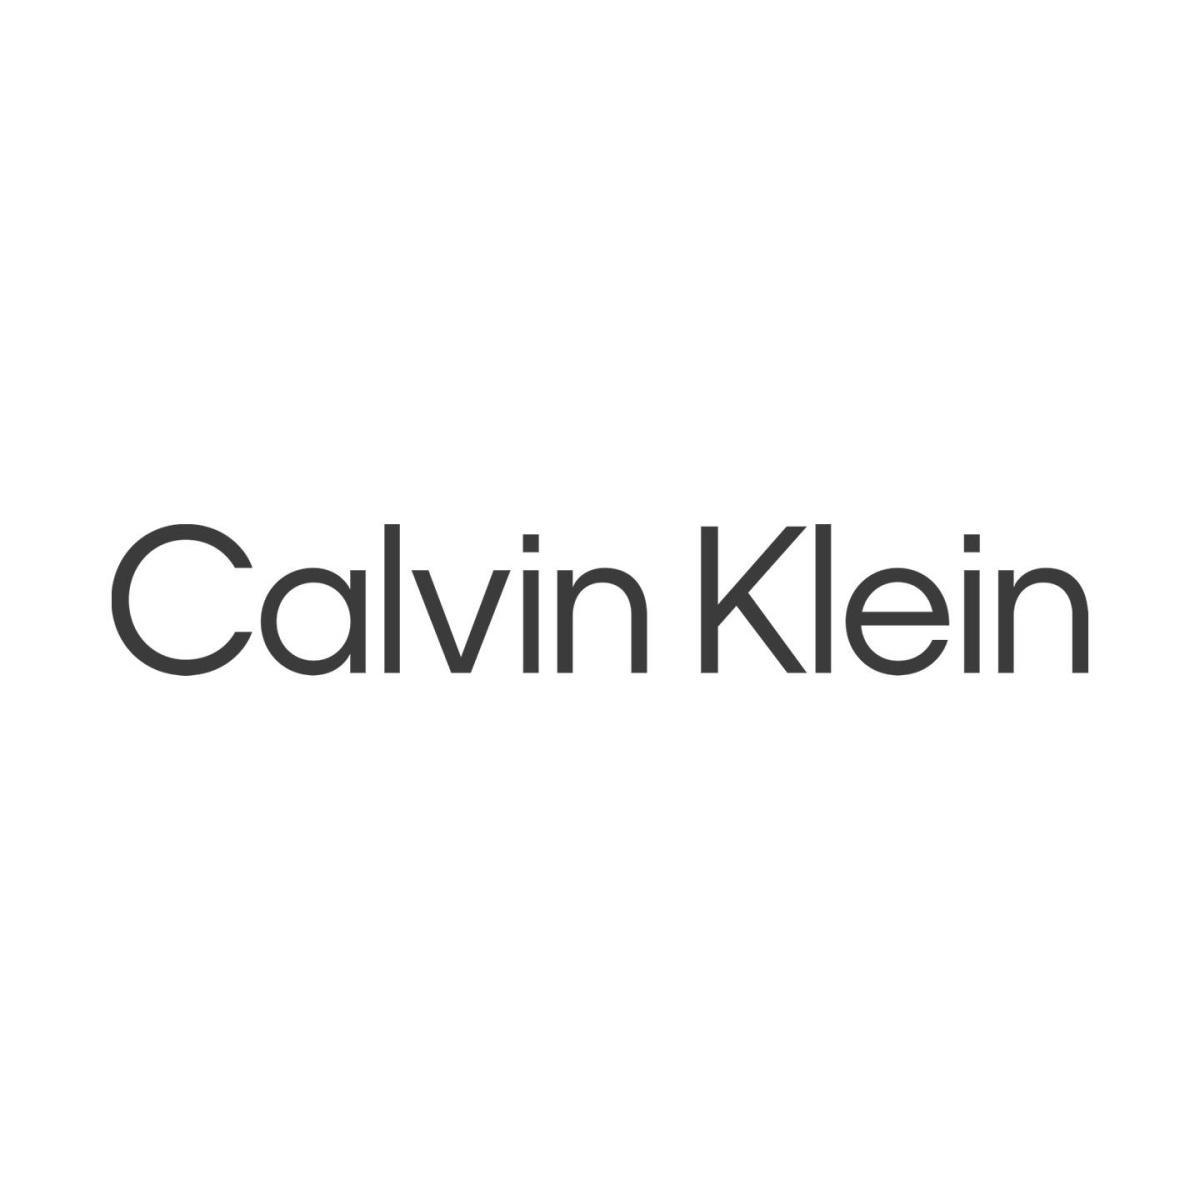 Calvin Klein Womens @ South Premium Outlet Mall